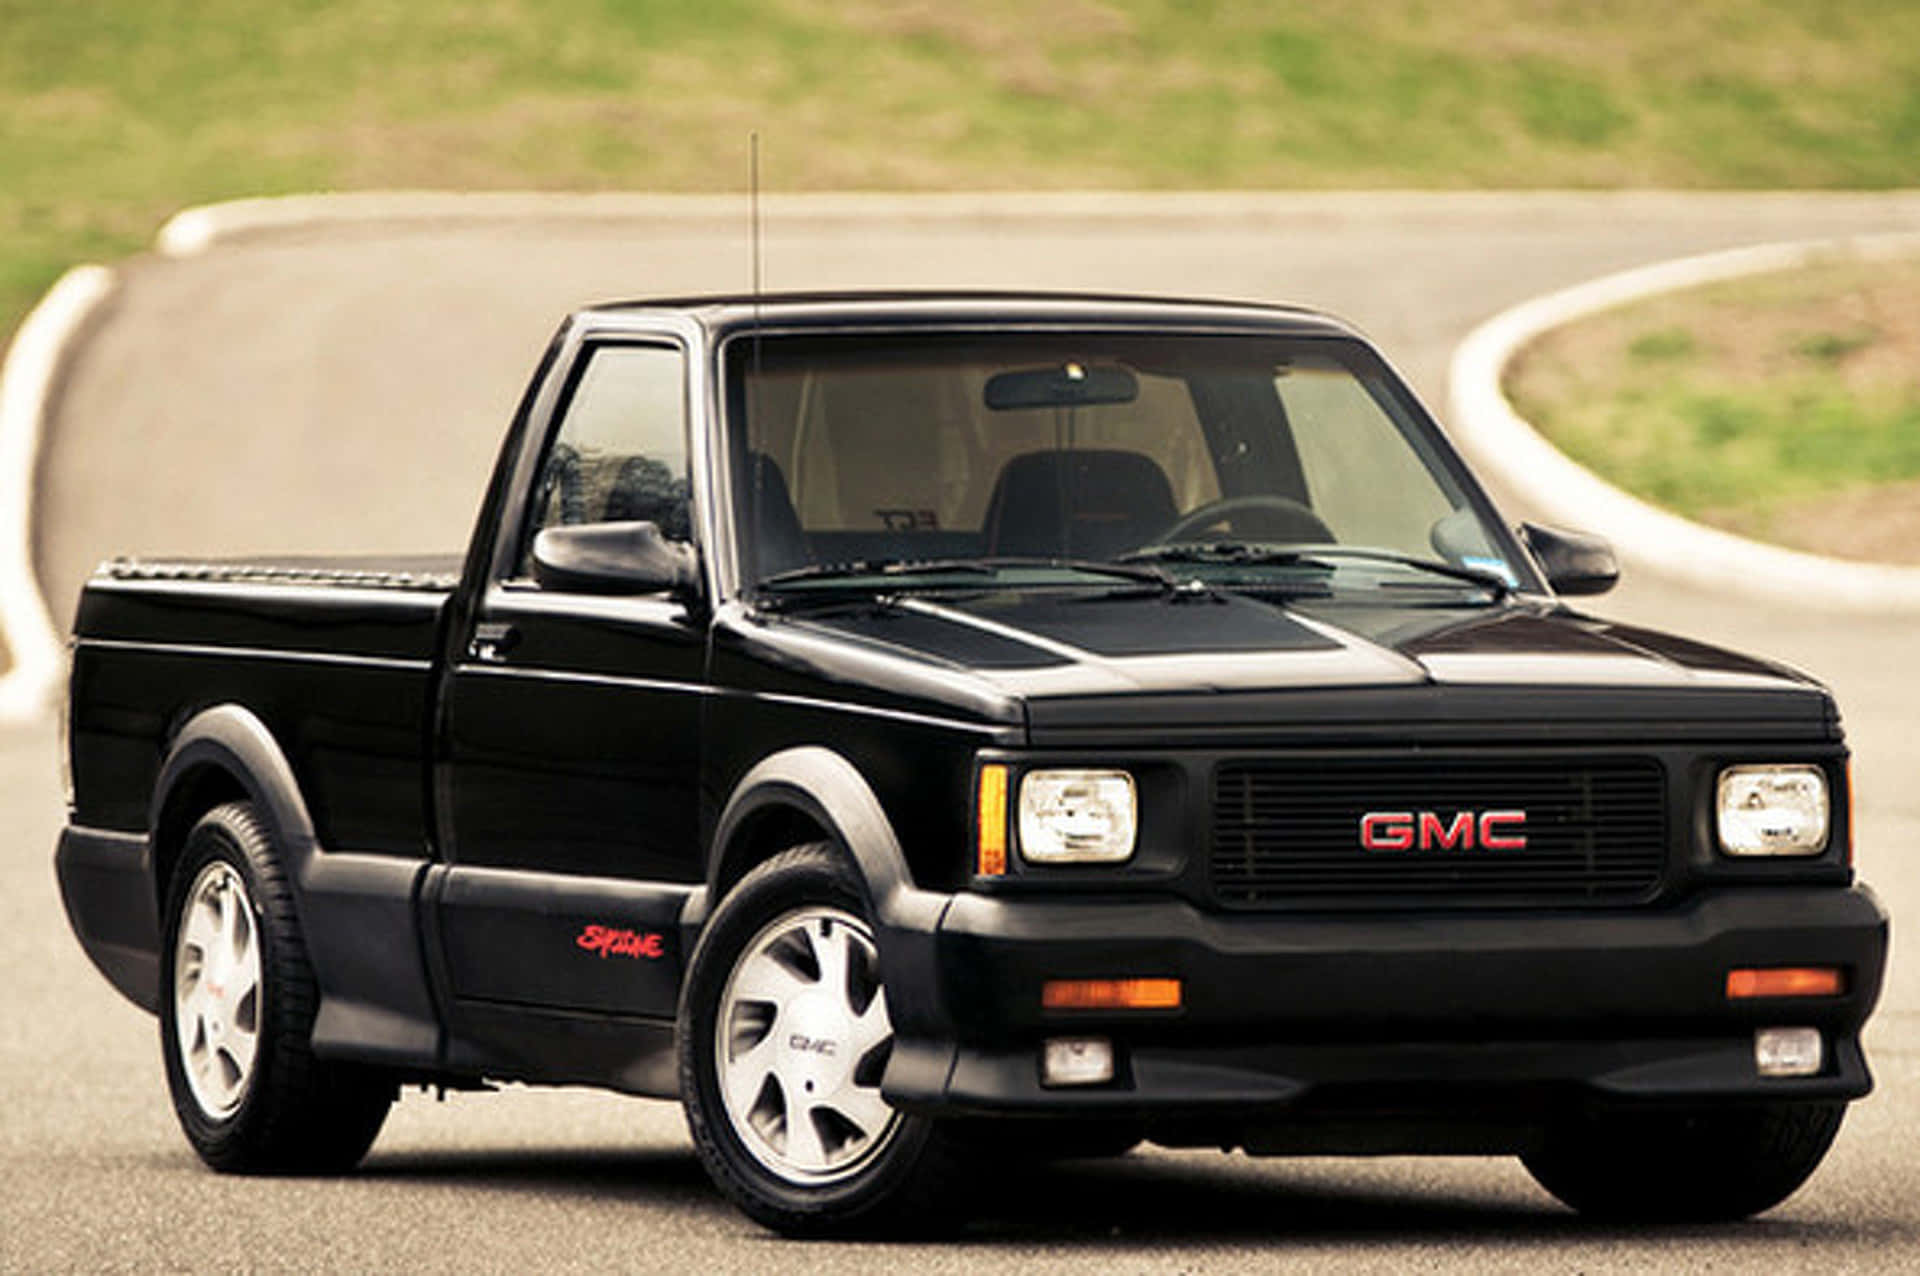 Caption: GMC Syclone 1991 - A Classic High-Performance Truck Wallpaper